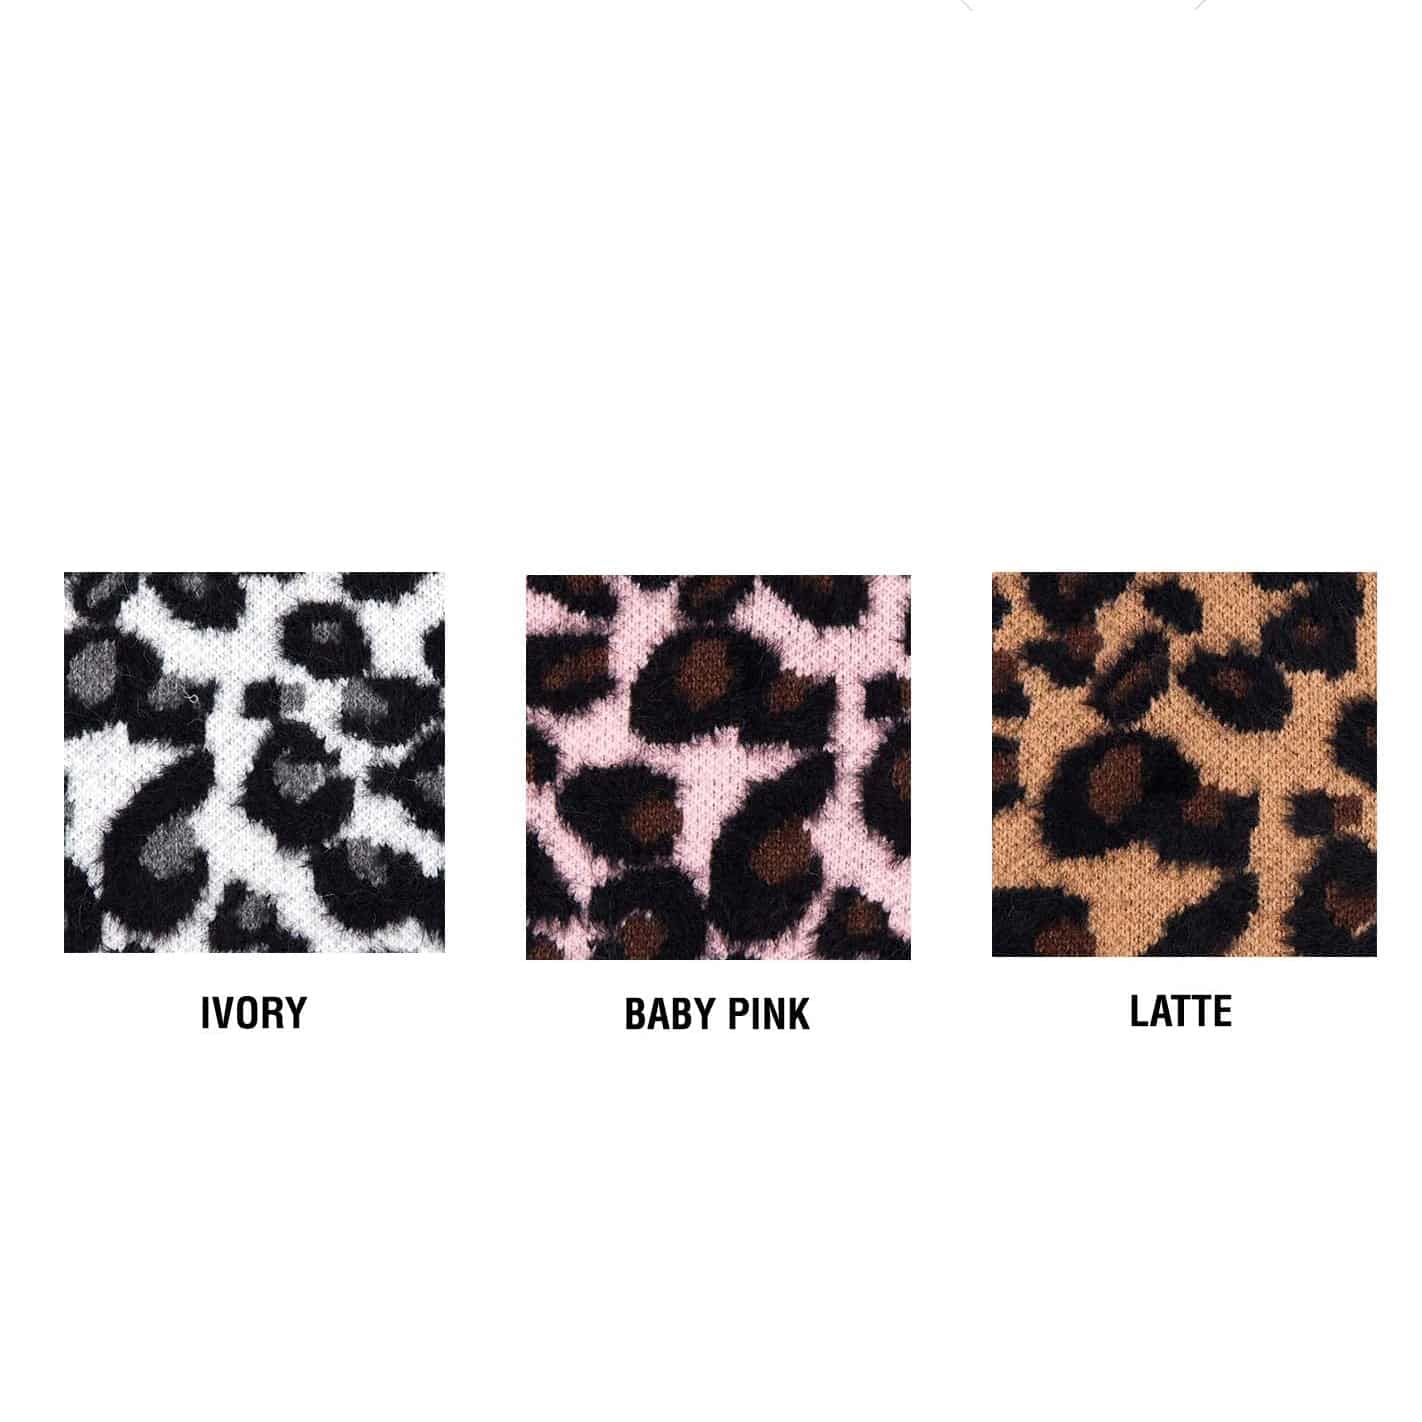 CC Baby Leopard Blanket